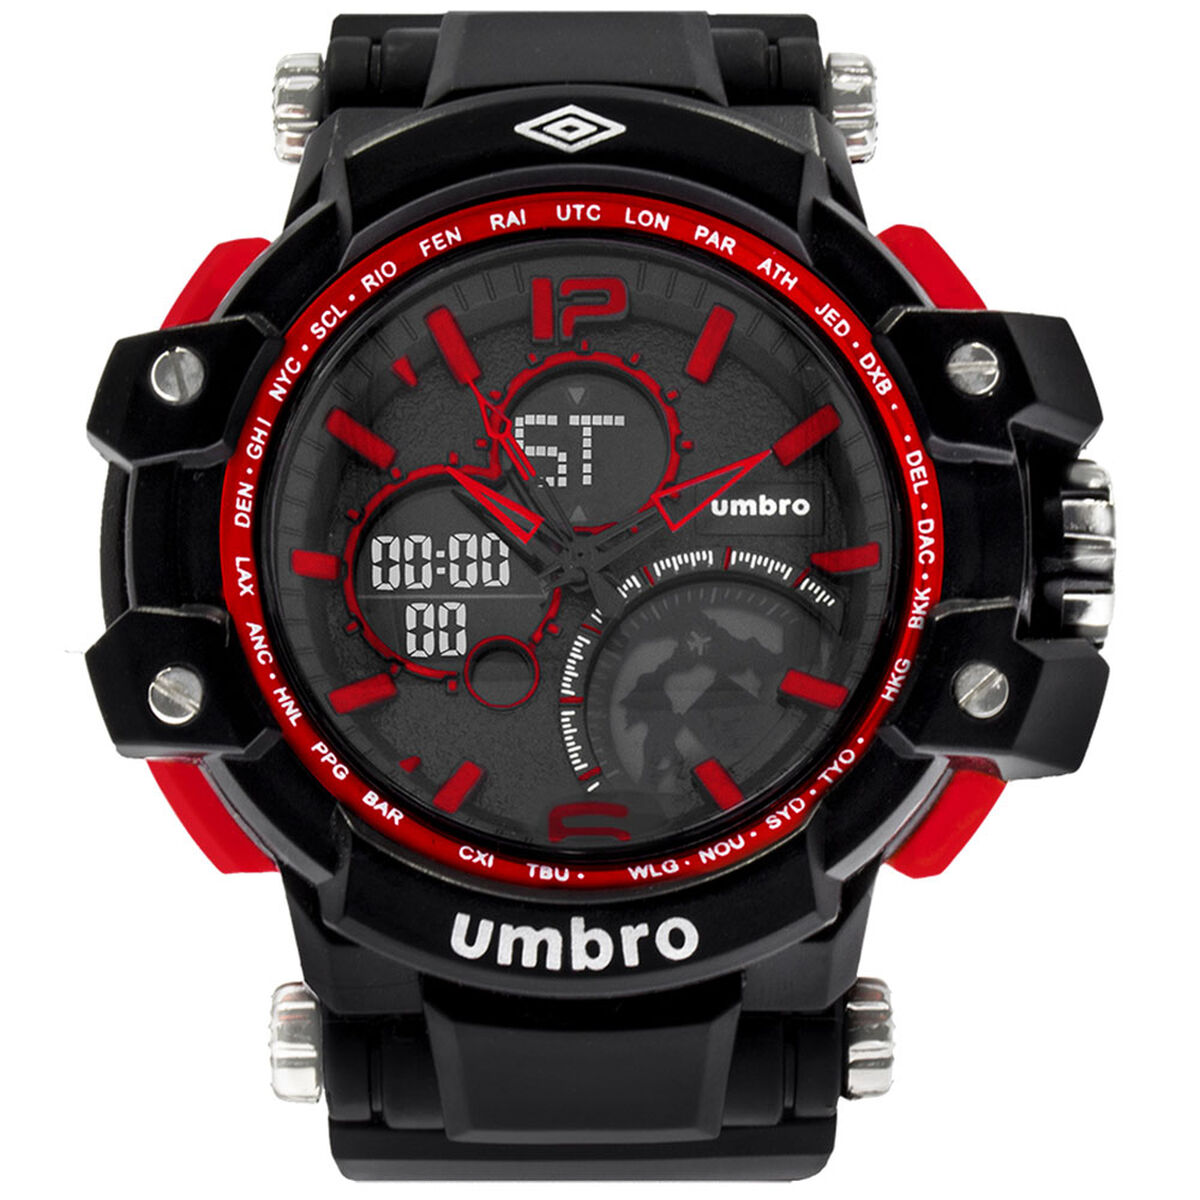 Reloj Digital UMBRO Modelo UMB-085-2